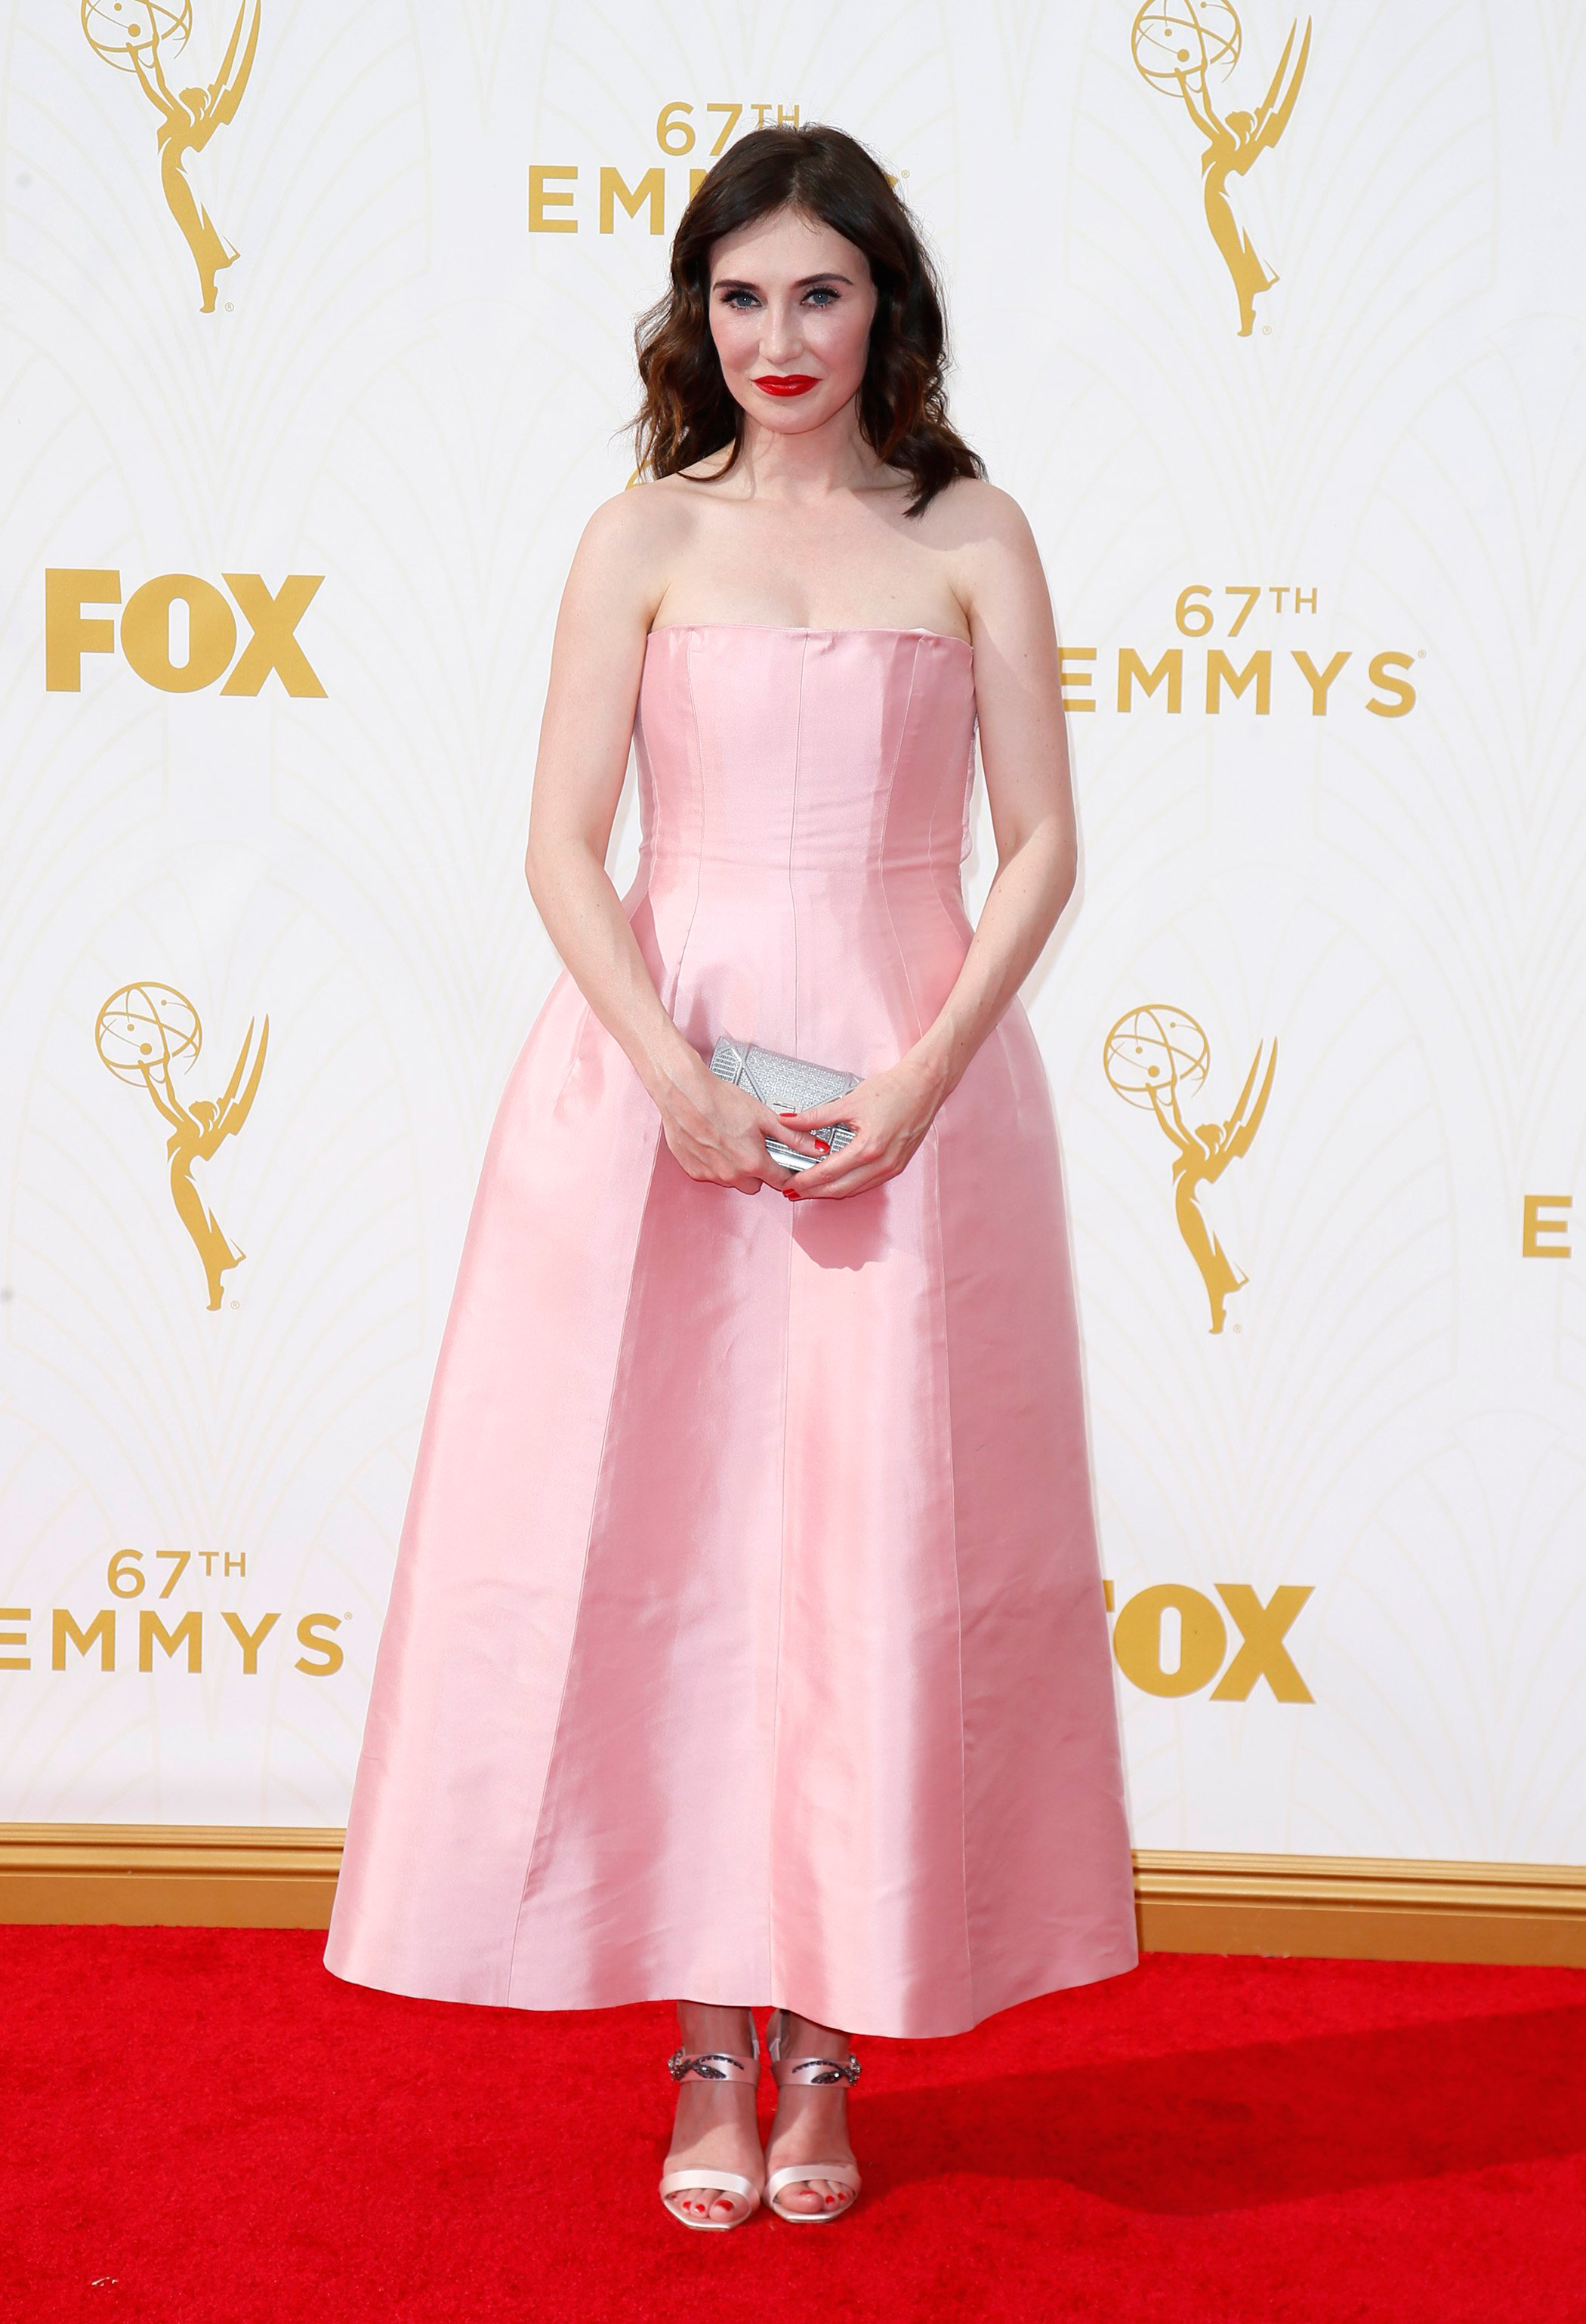 67th Emmys Awards - Carice van Houten - 2015